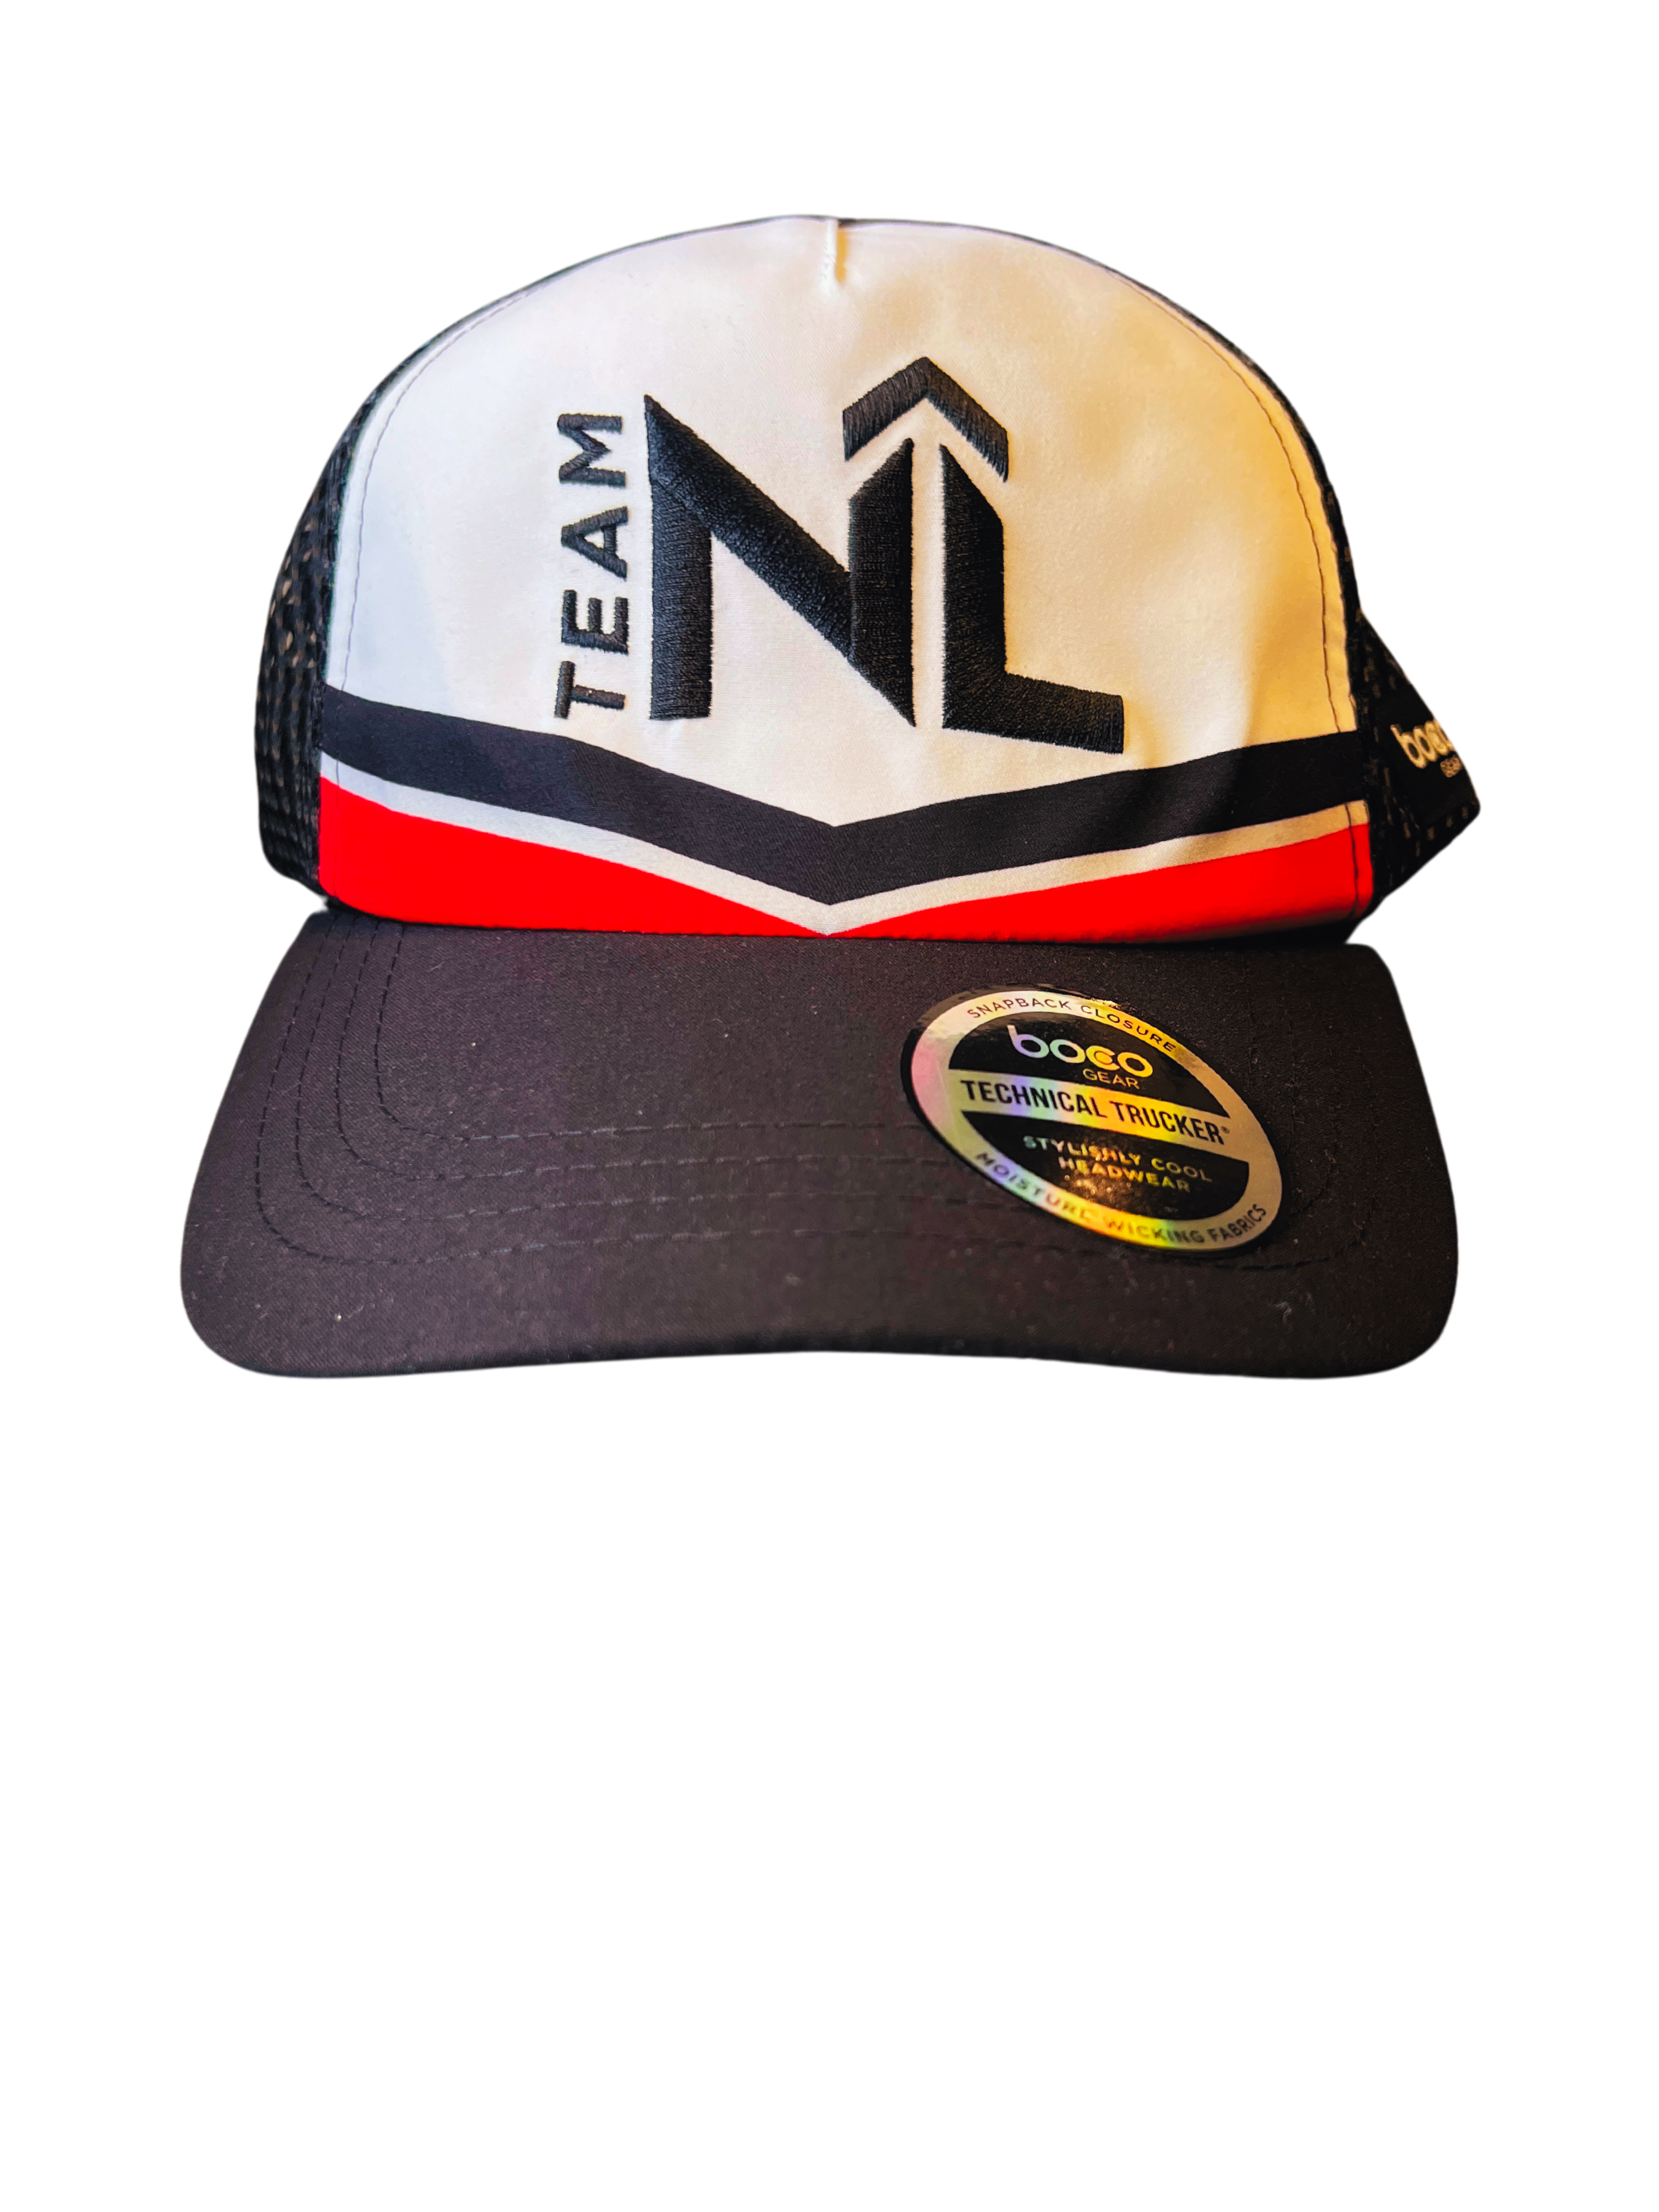 Team NL Ventilator Technical Trucker Hat